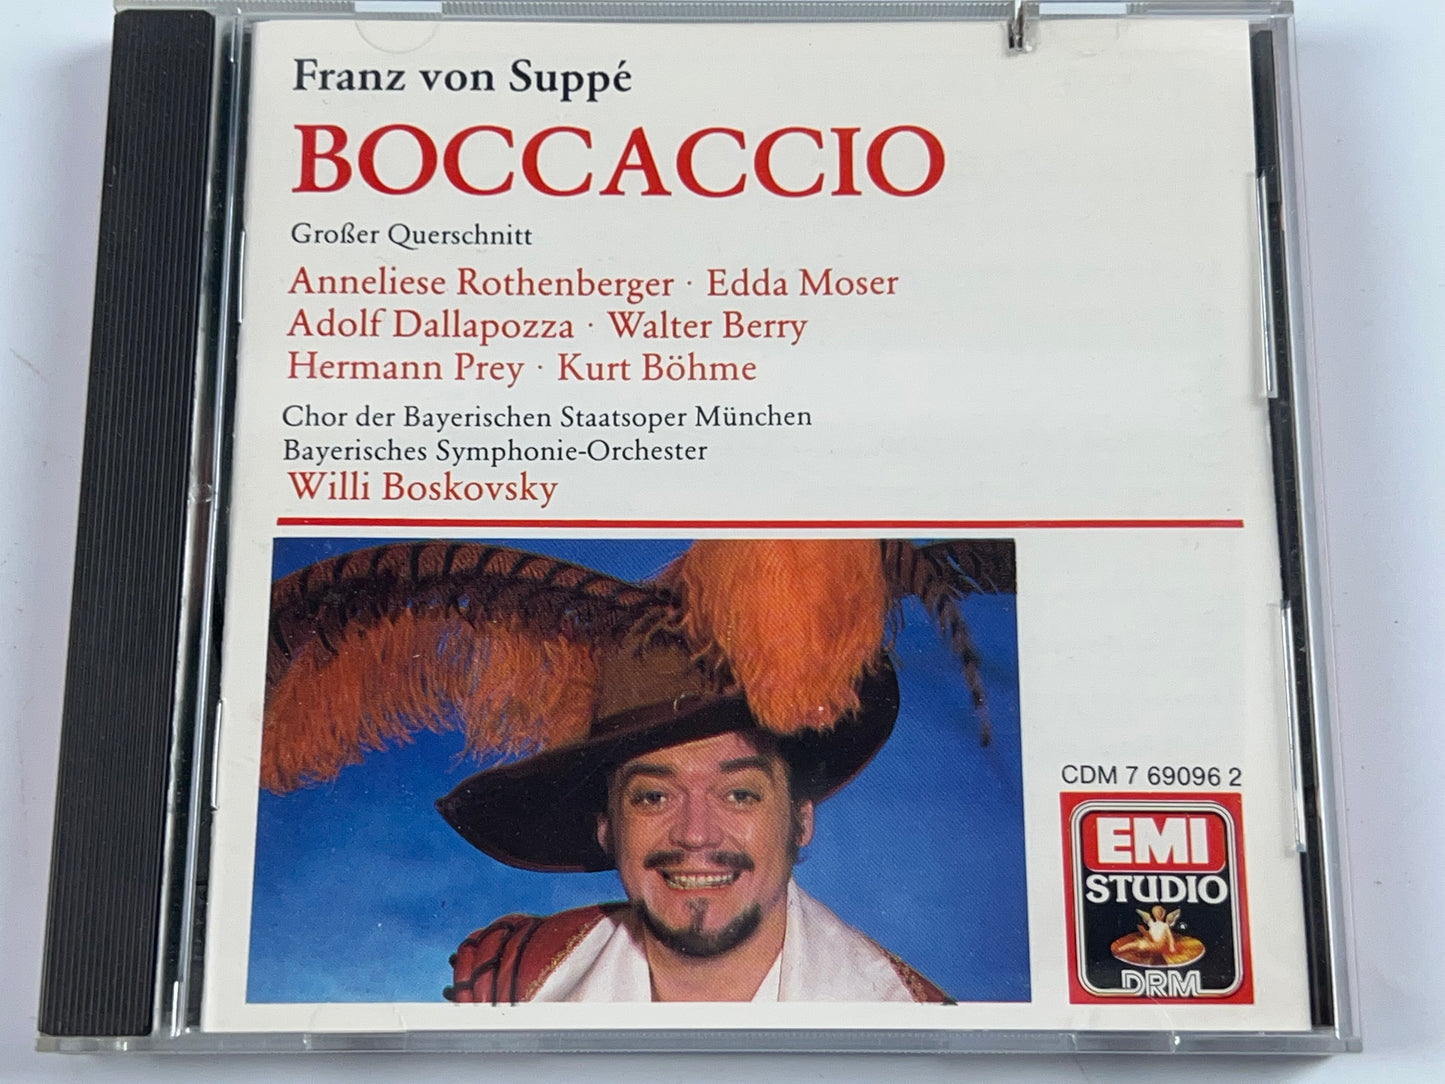 Von Suppe "Boccaccio" Opera Highlights - Prey, Moser, Berry w Boskovsky 1975 CD